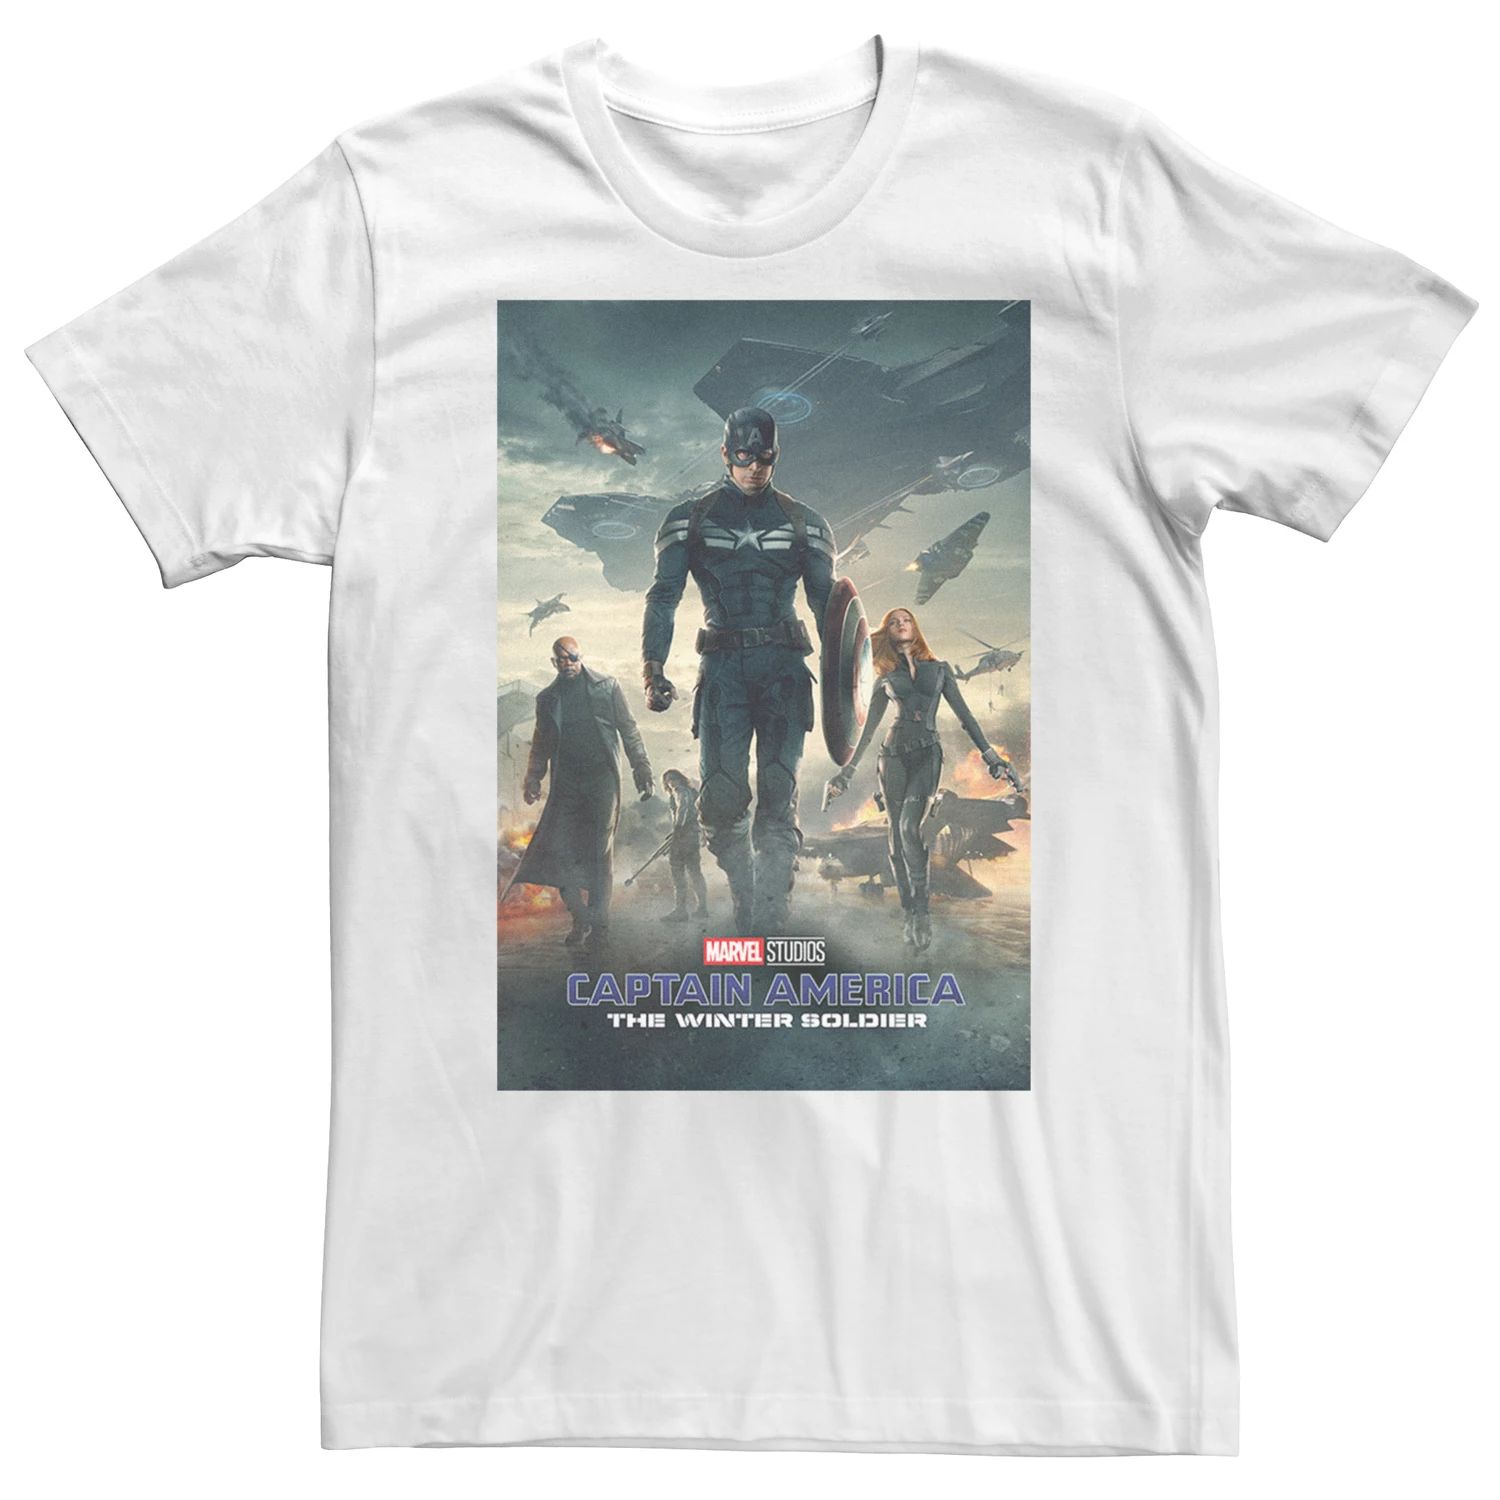 Мужская футболка с плакатом «Капитан Америка: Зимний солдат» Licensed Character